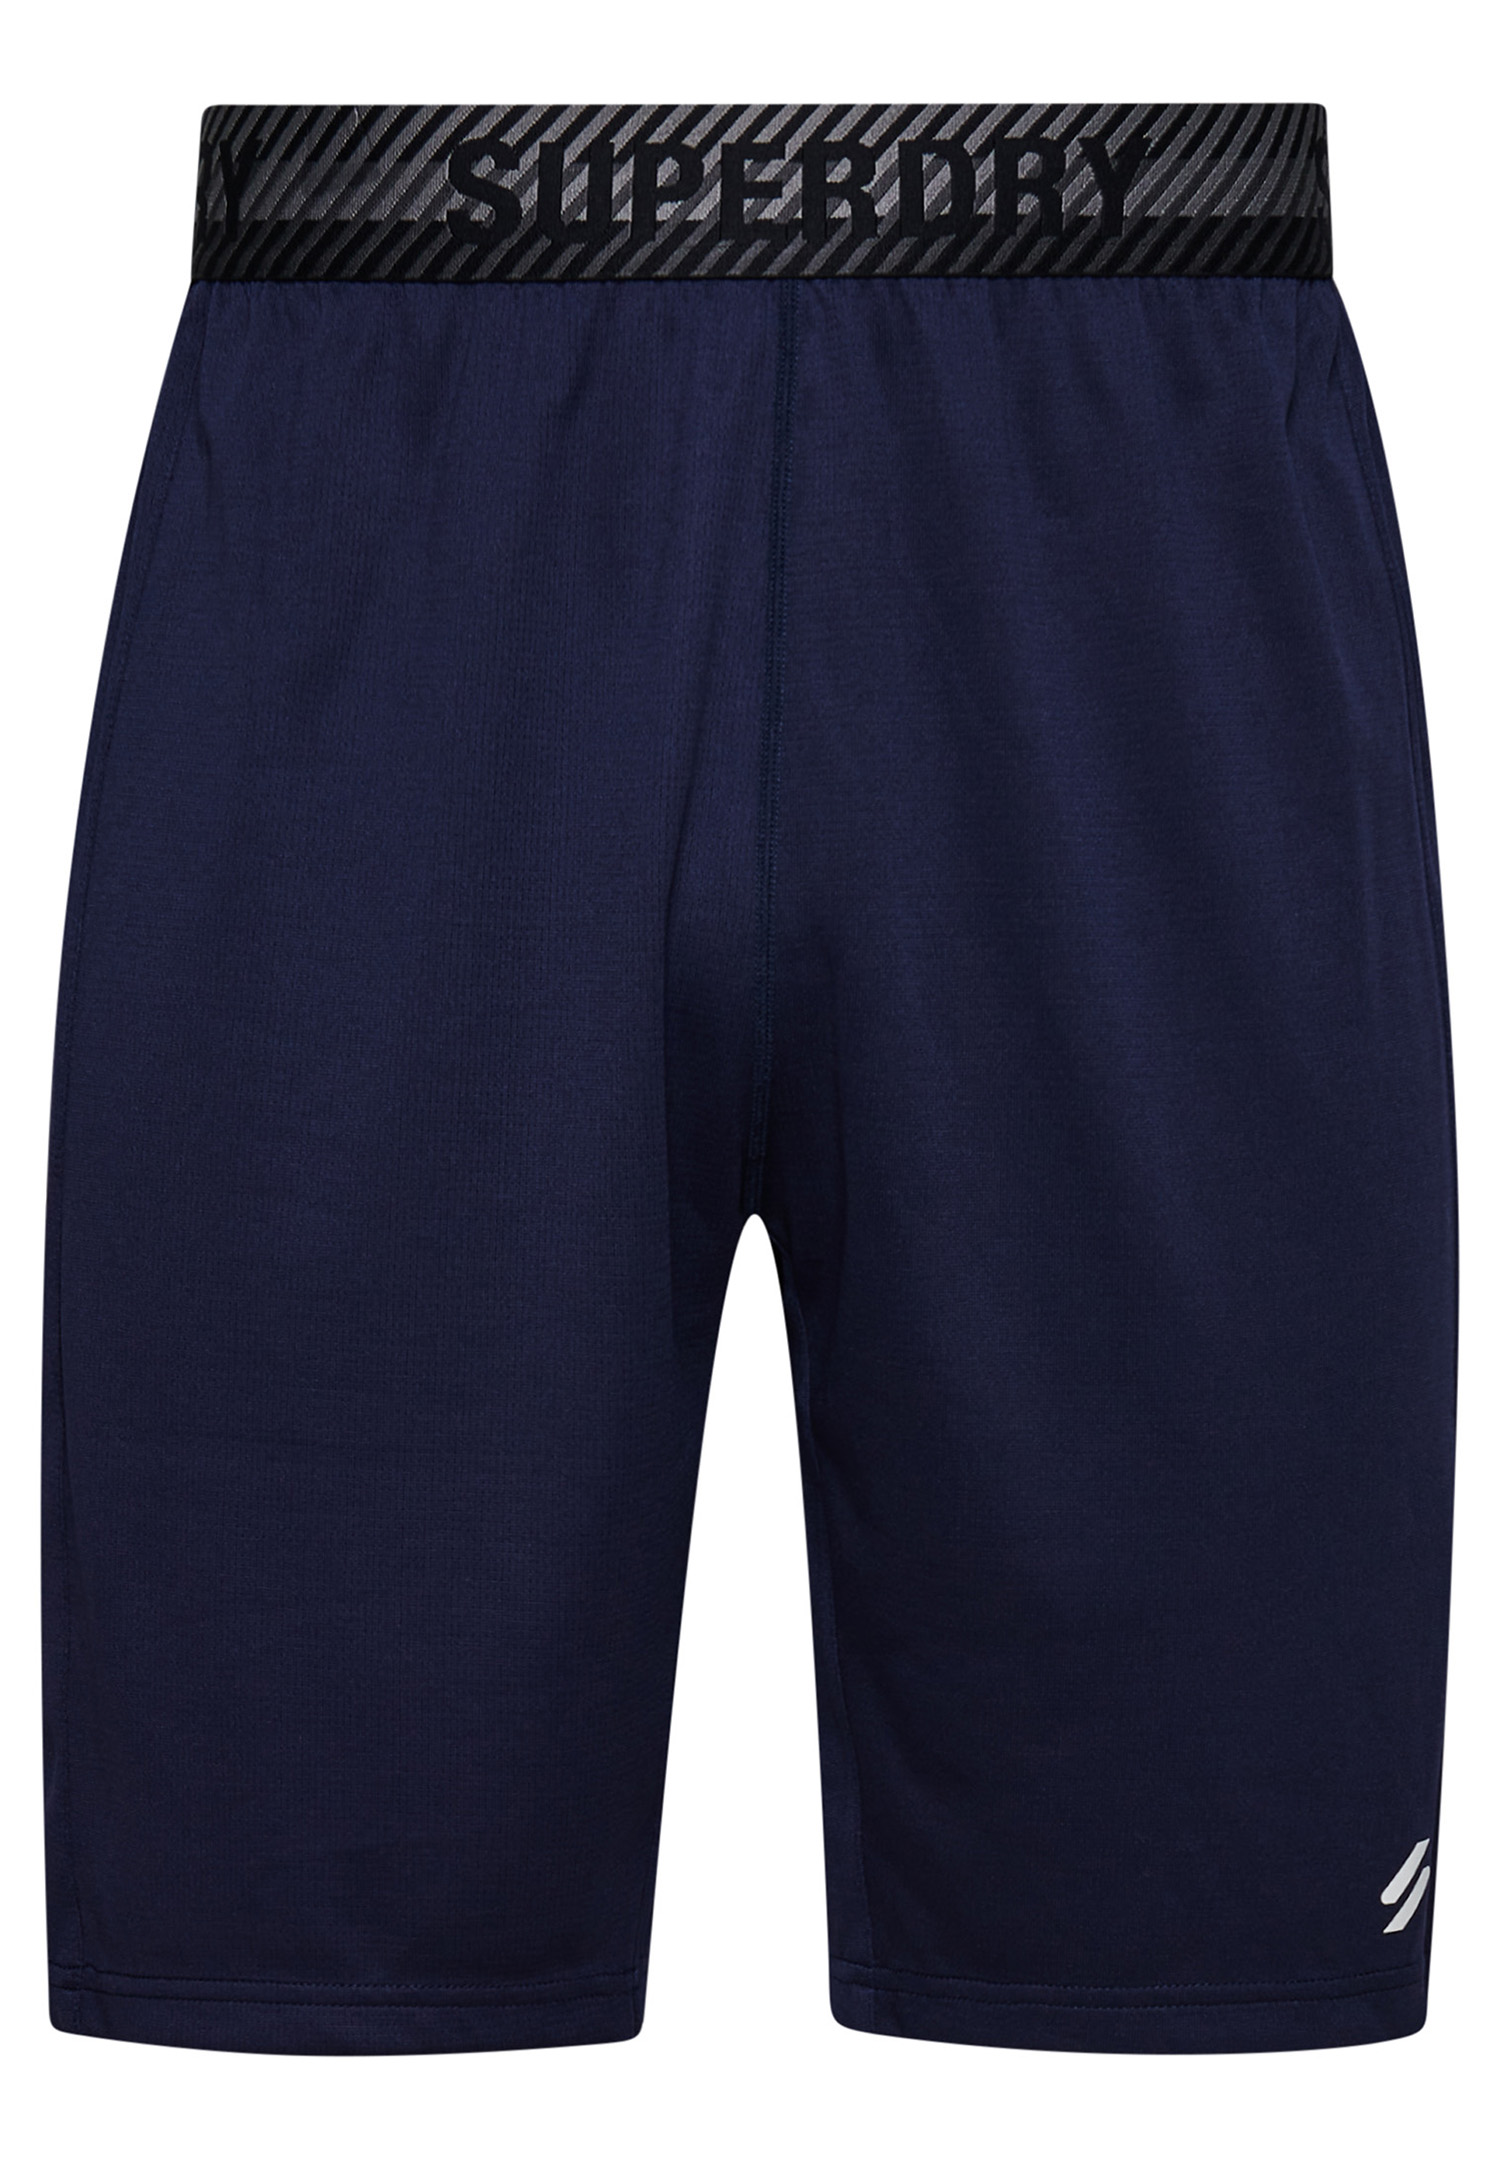 Superdry Herren Core Relaxed Shorts MS311301A blau von Superdry